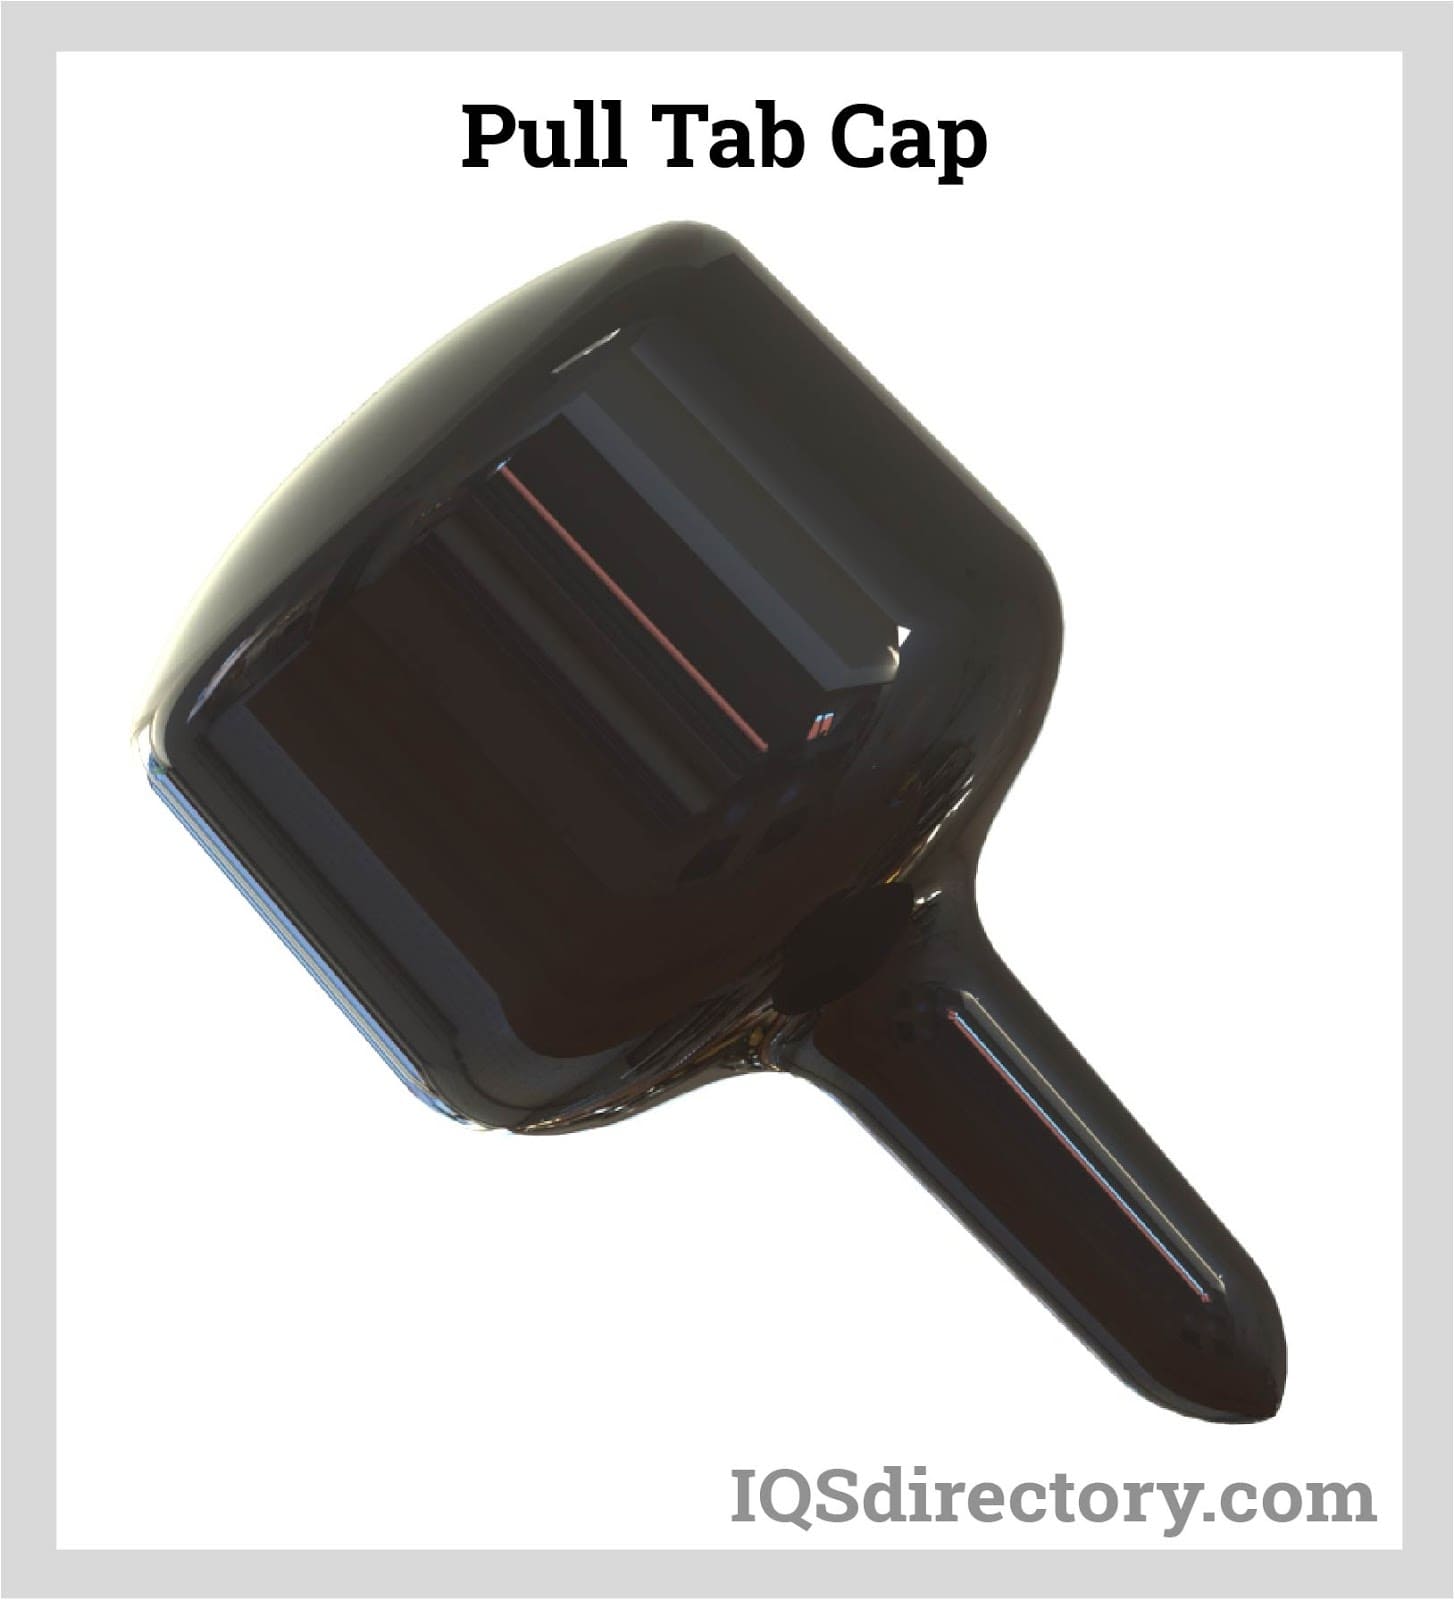 Pull Tab Cap